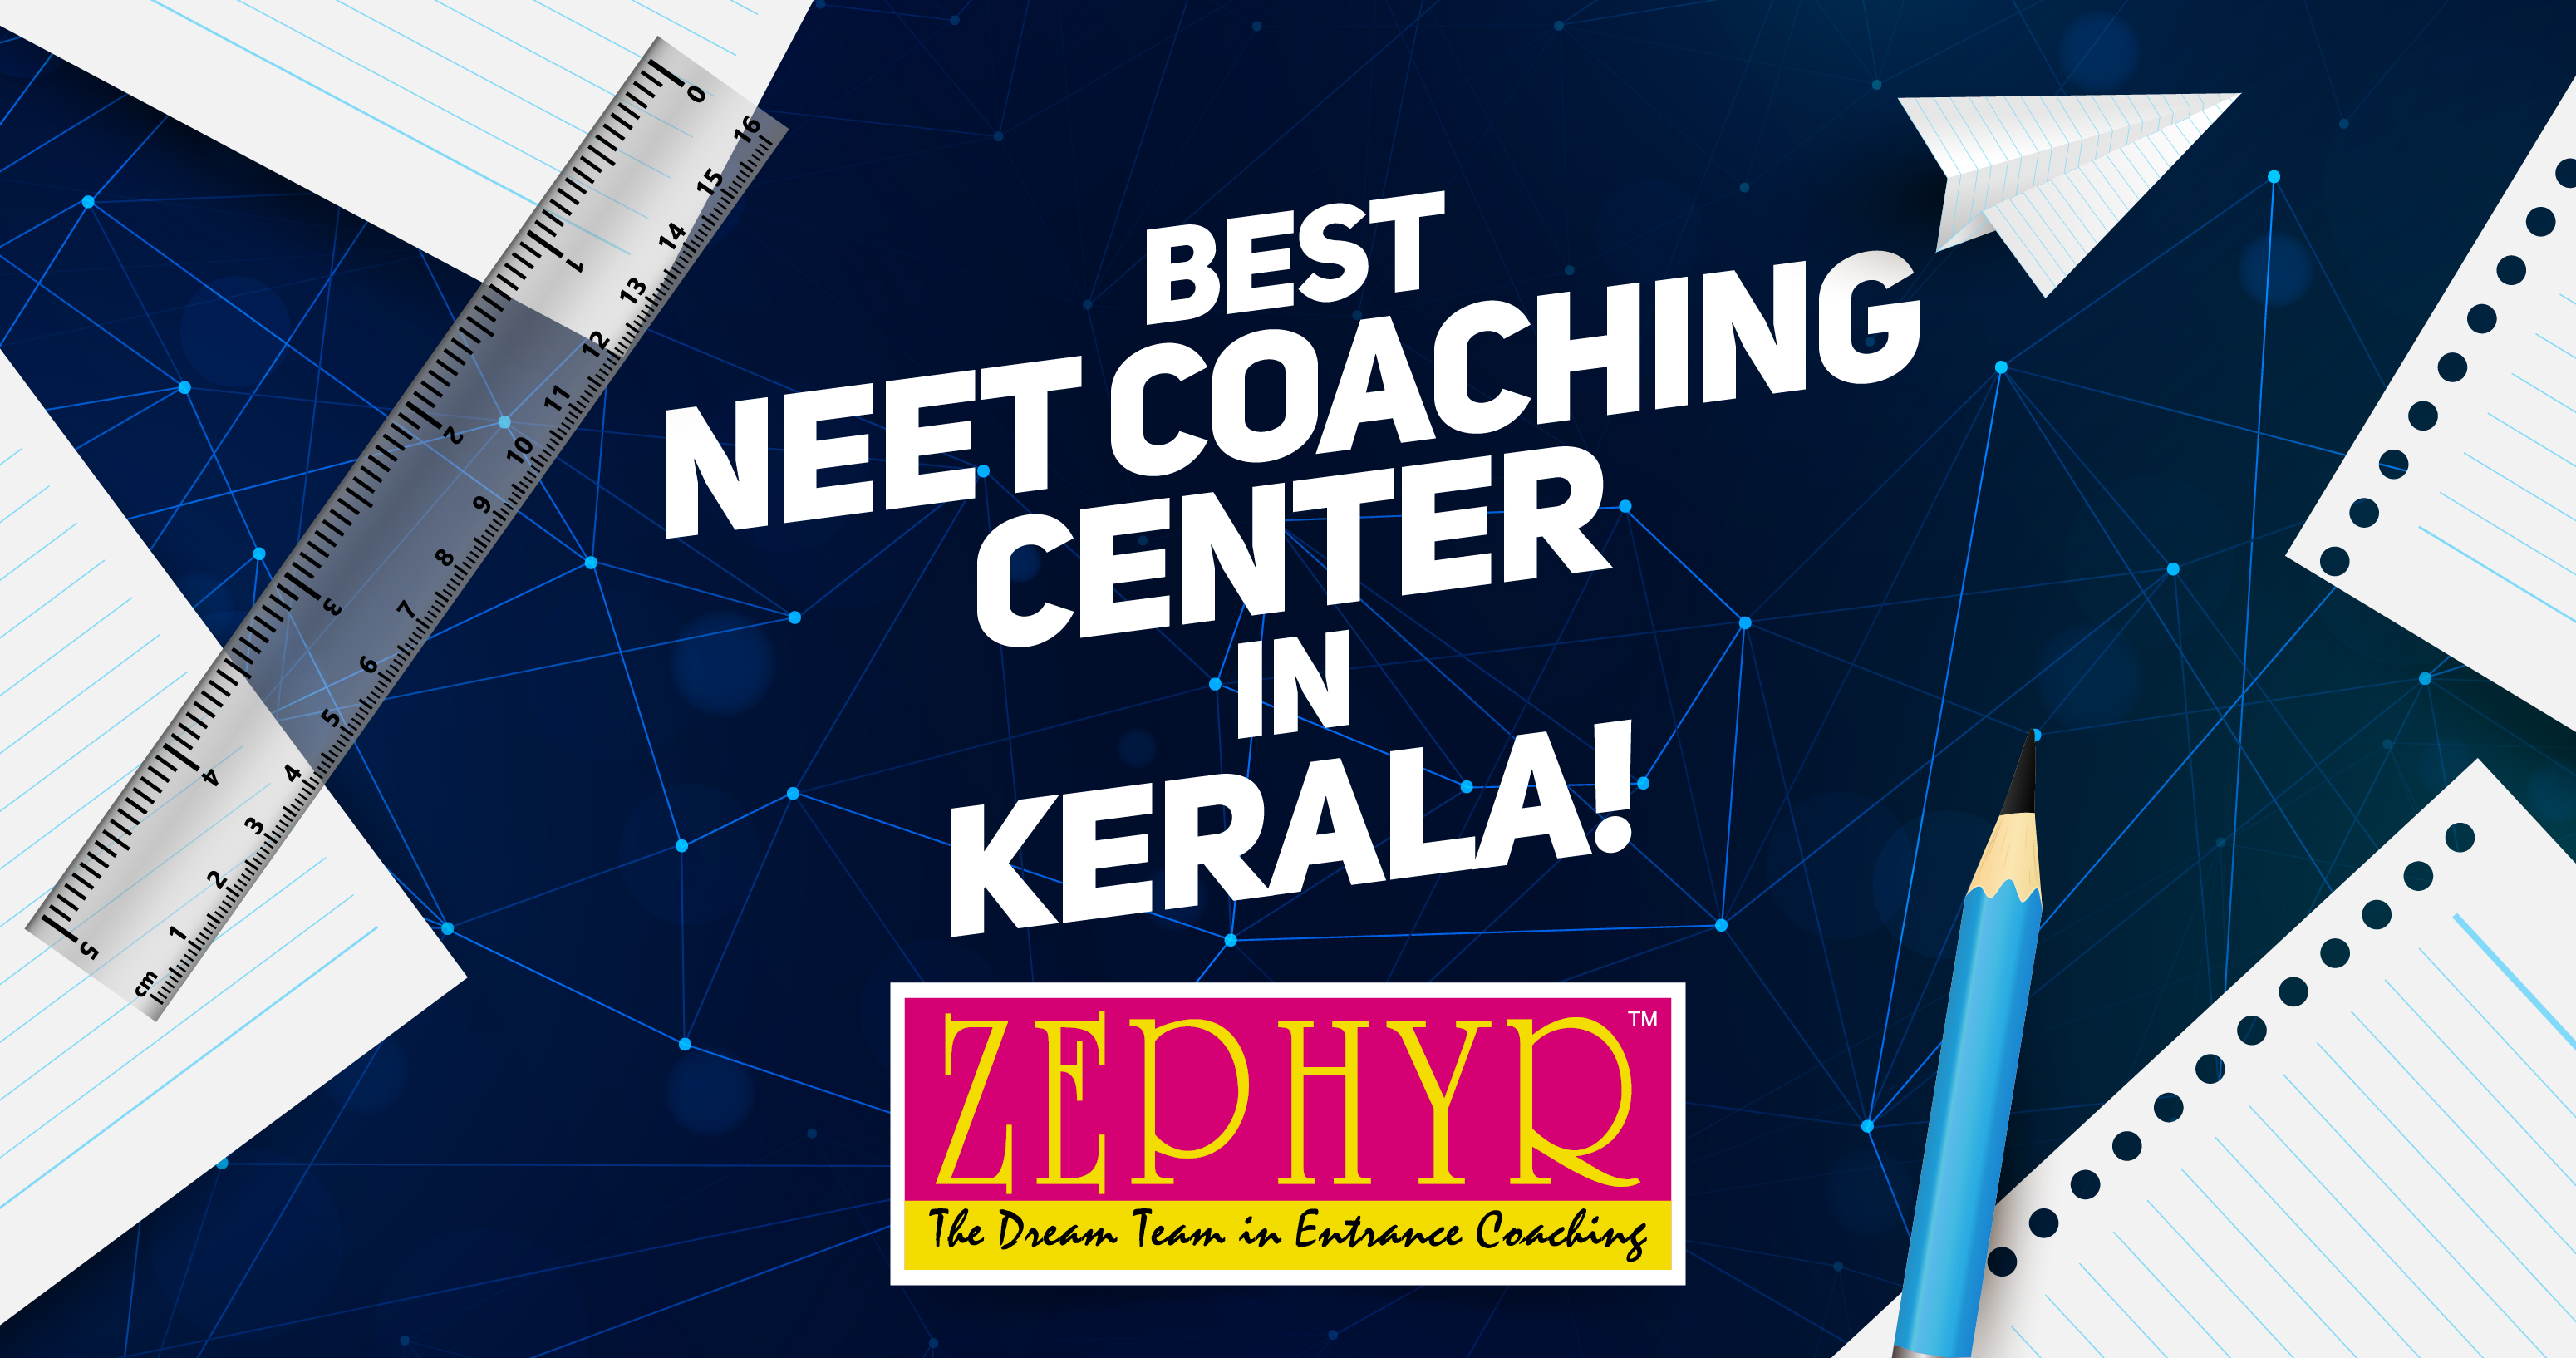 Best NEET Coaching Center in Kerala